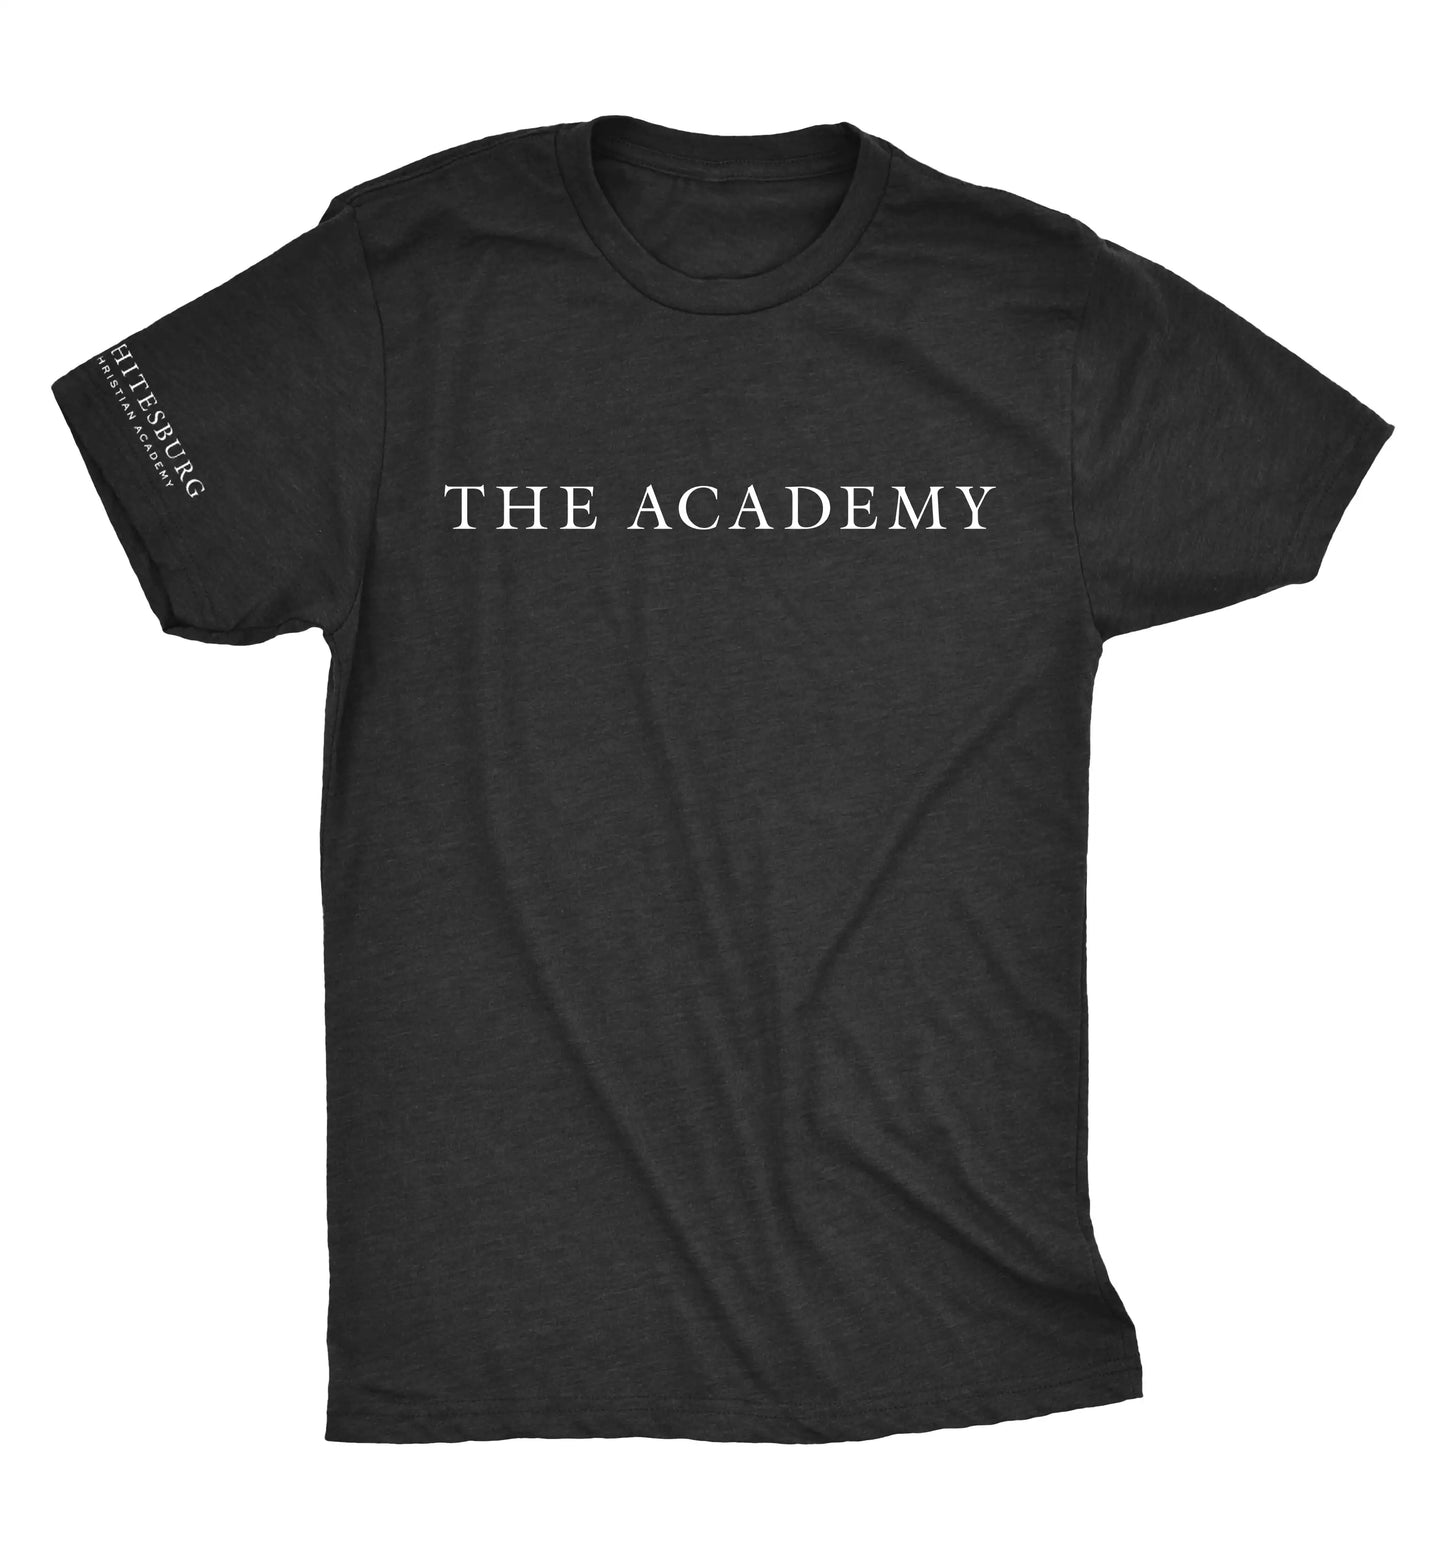 The Academy Tshirt